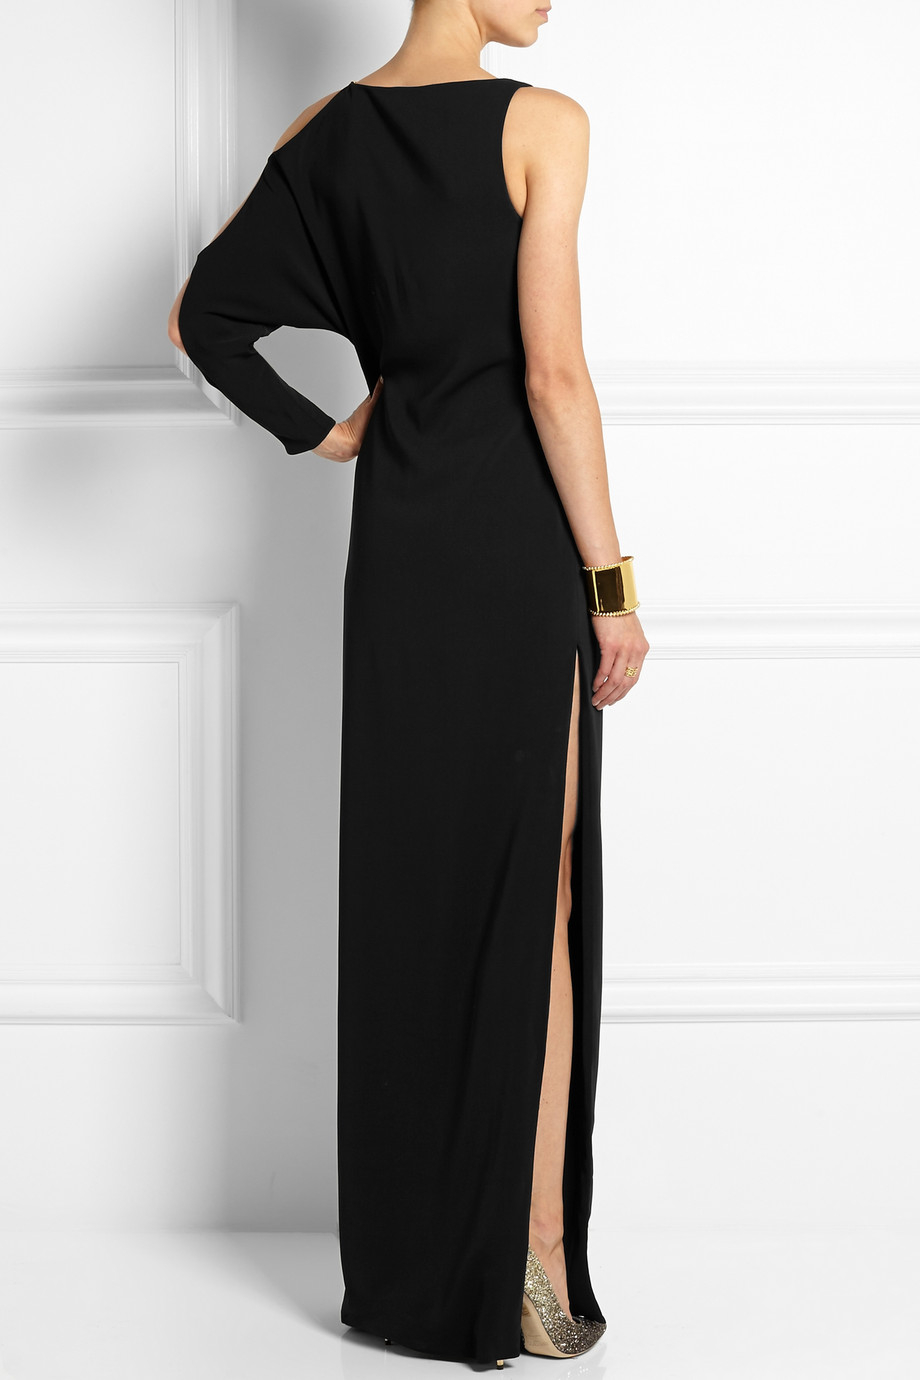 Lyst - Halston Asymmetric Cutout Jersey-Crepe Gown in Black